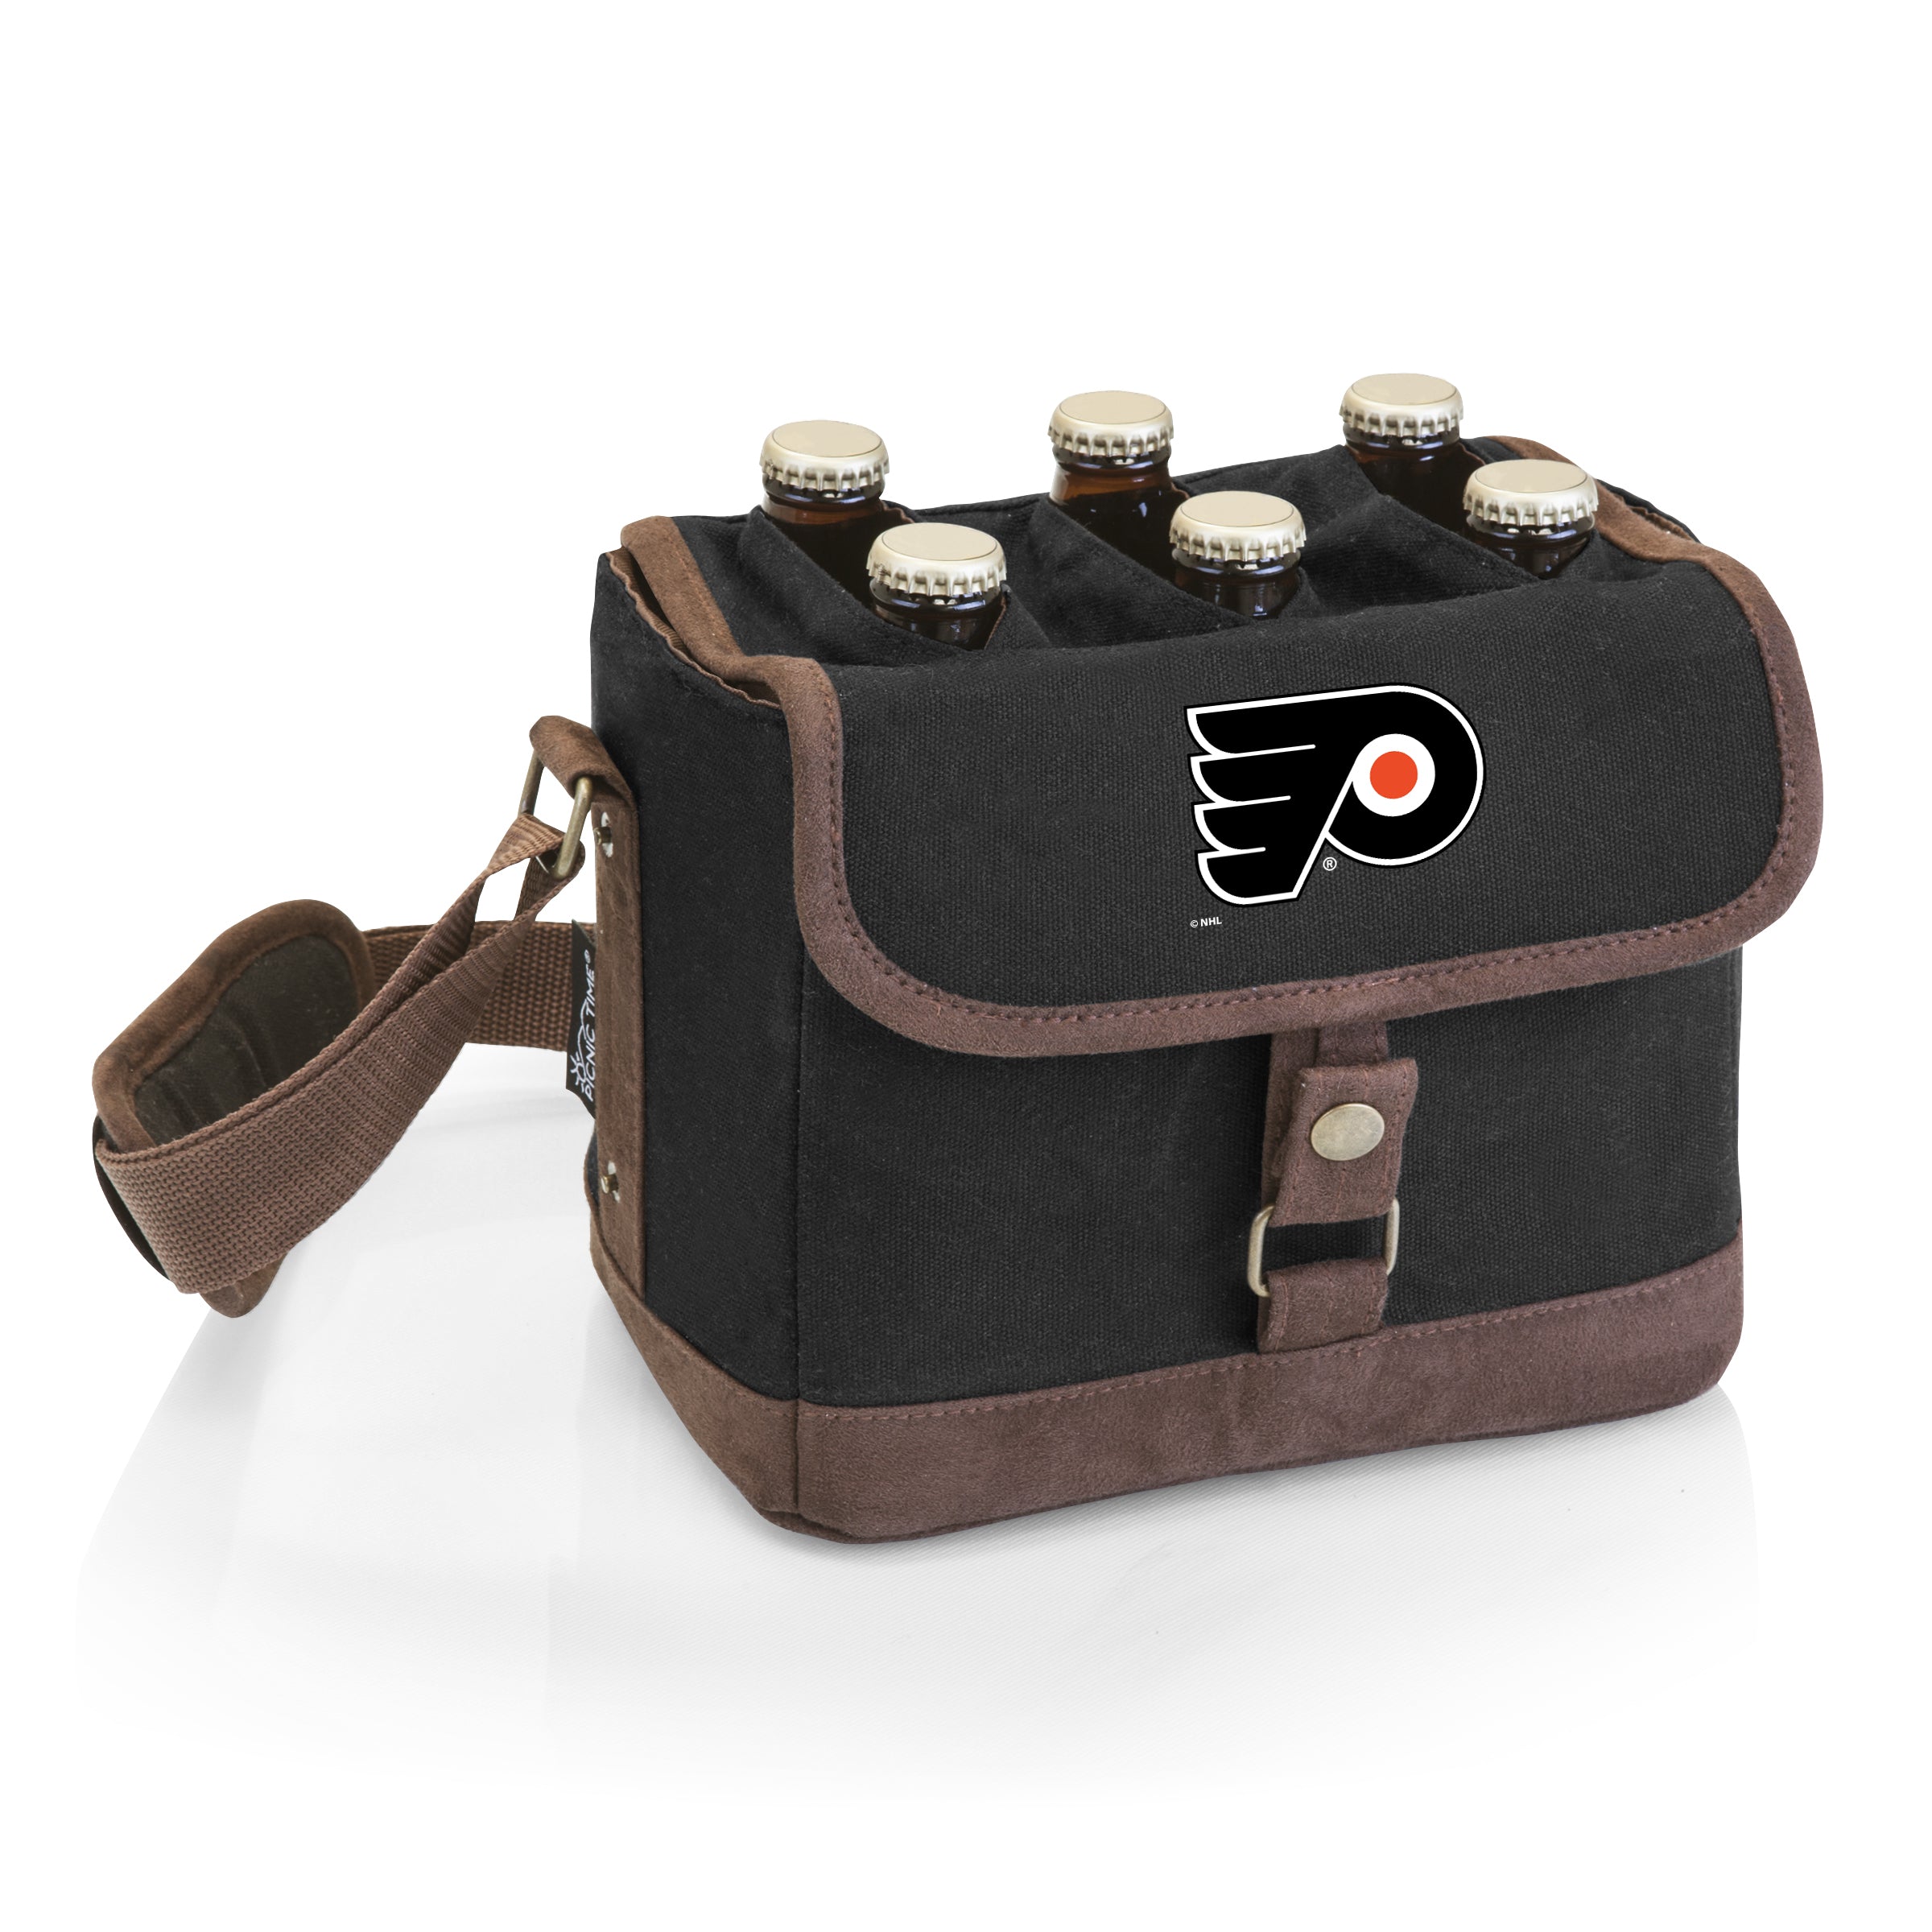 Philadelphia Flyers - Beer Caddy Cooler Tote with Opener